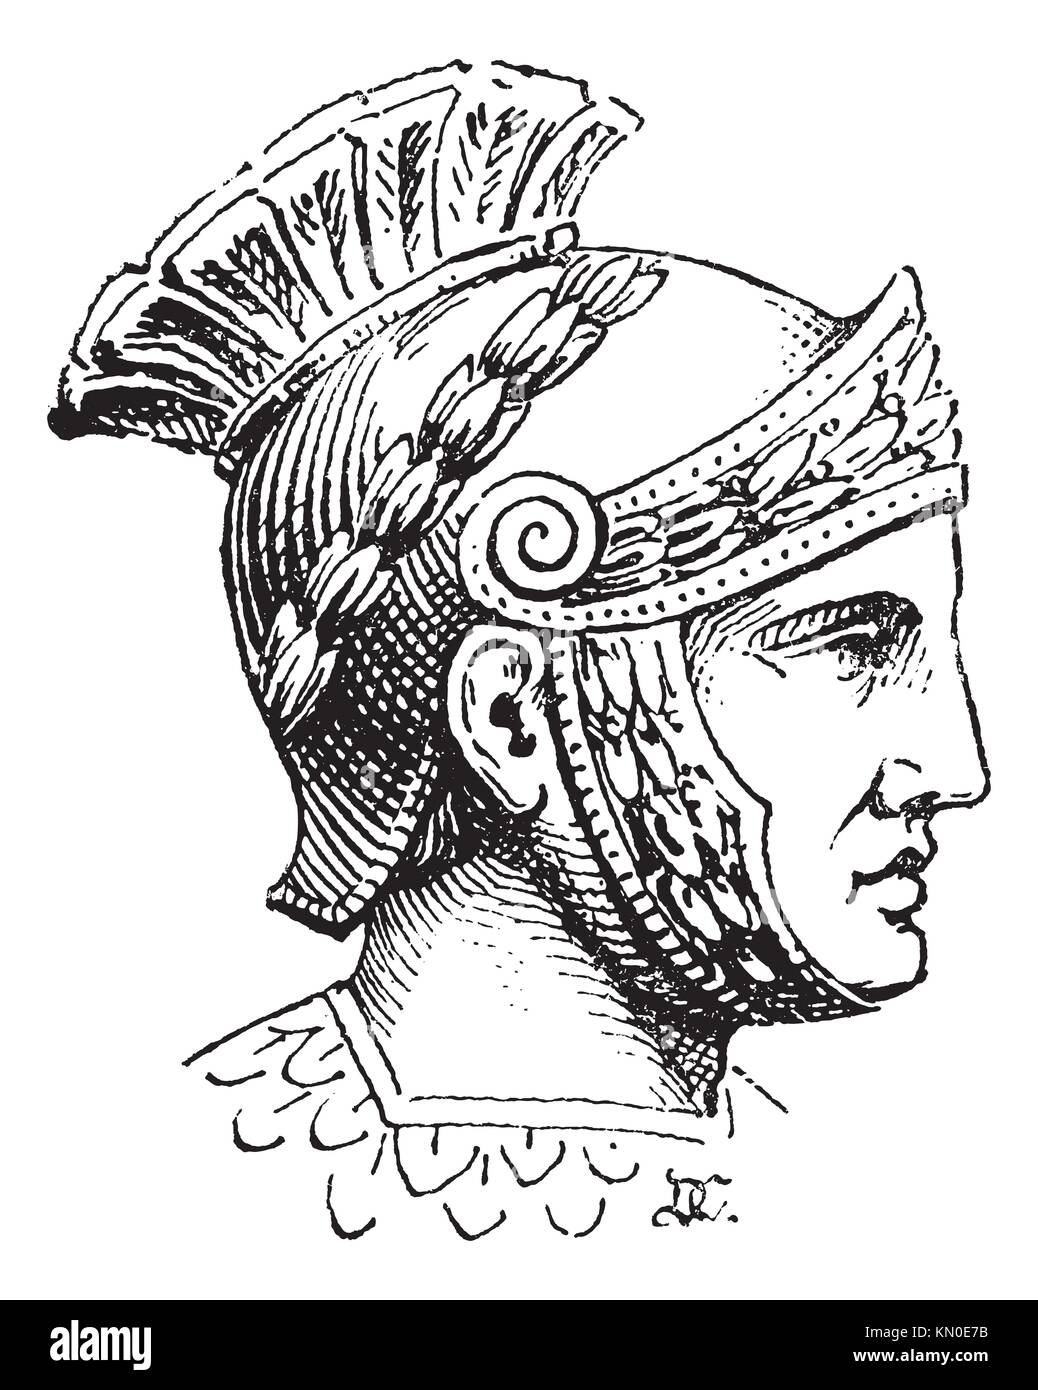 Голова Римского воина в шлеме